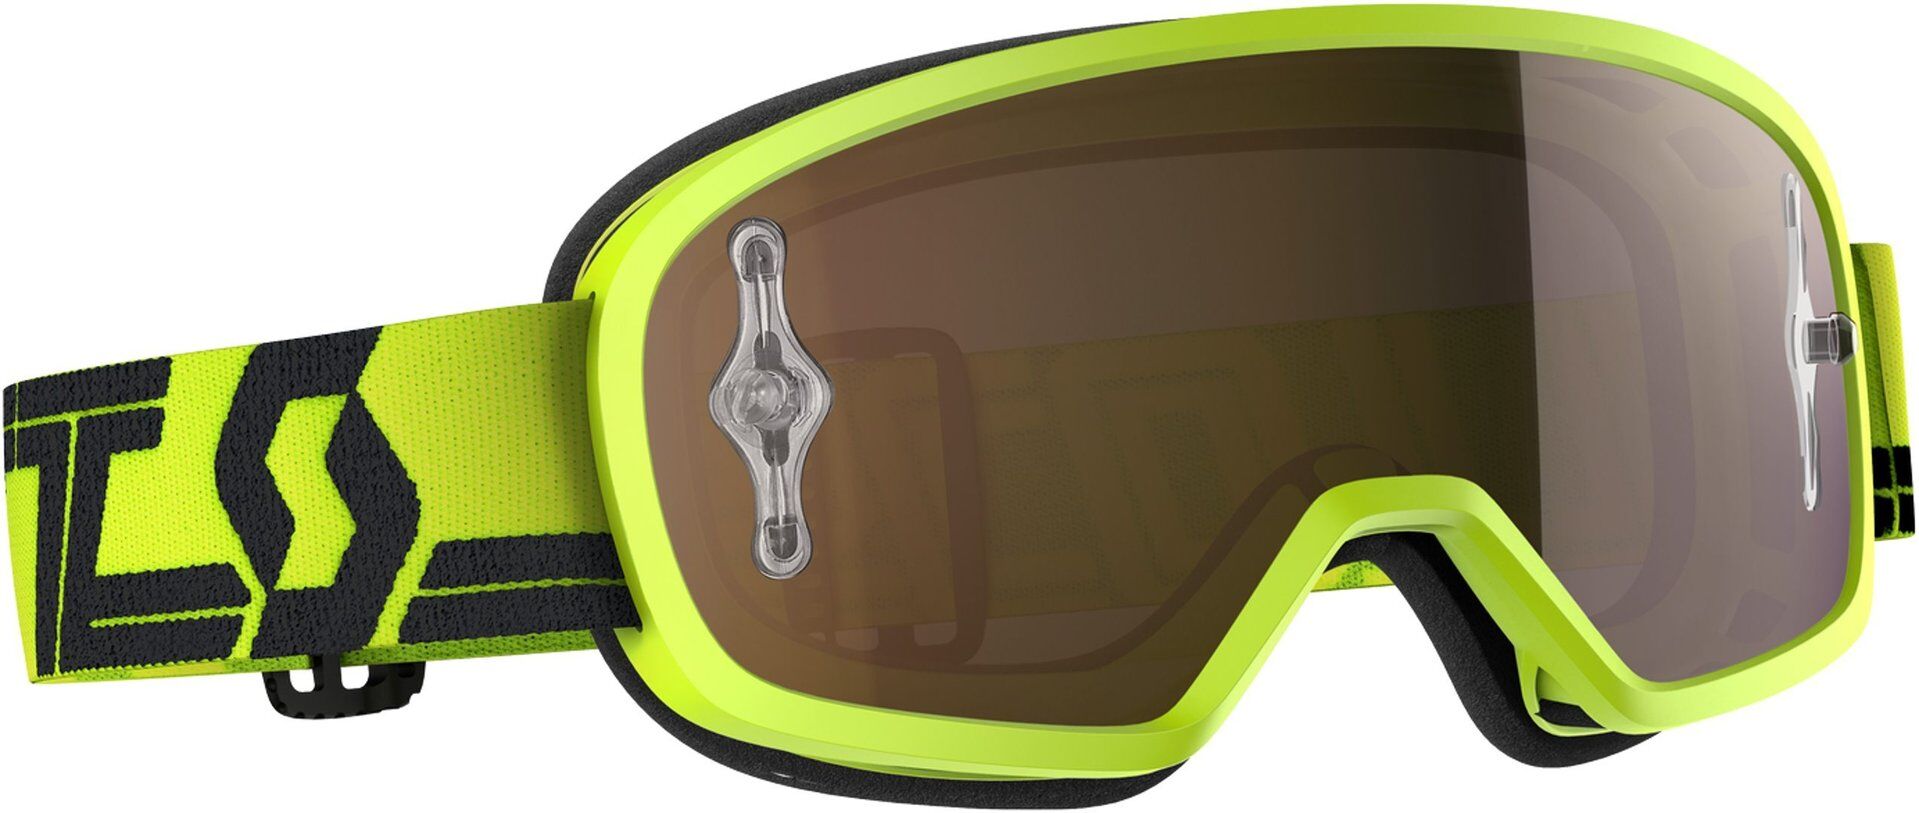 Photos - Motorcycle Goggles / Face Mask Scott Buzz Pro Kids Motocross Goggles Unisex Black Yellow Size: One Size 2 